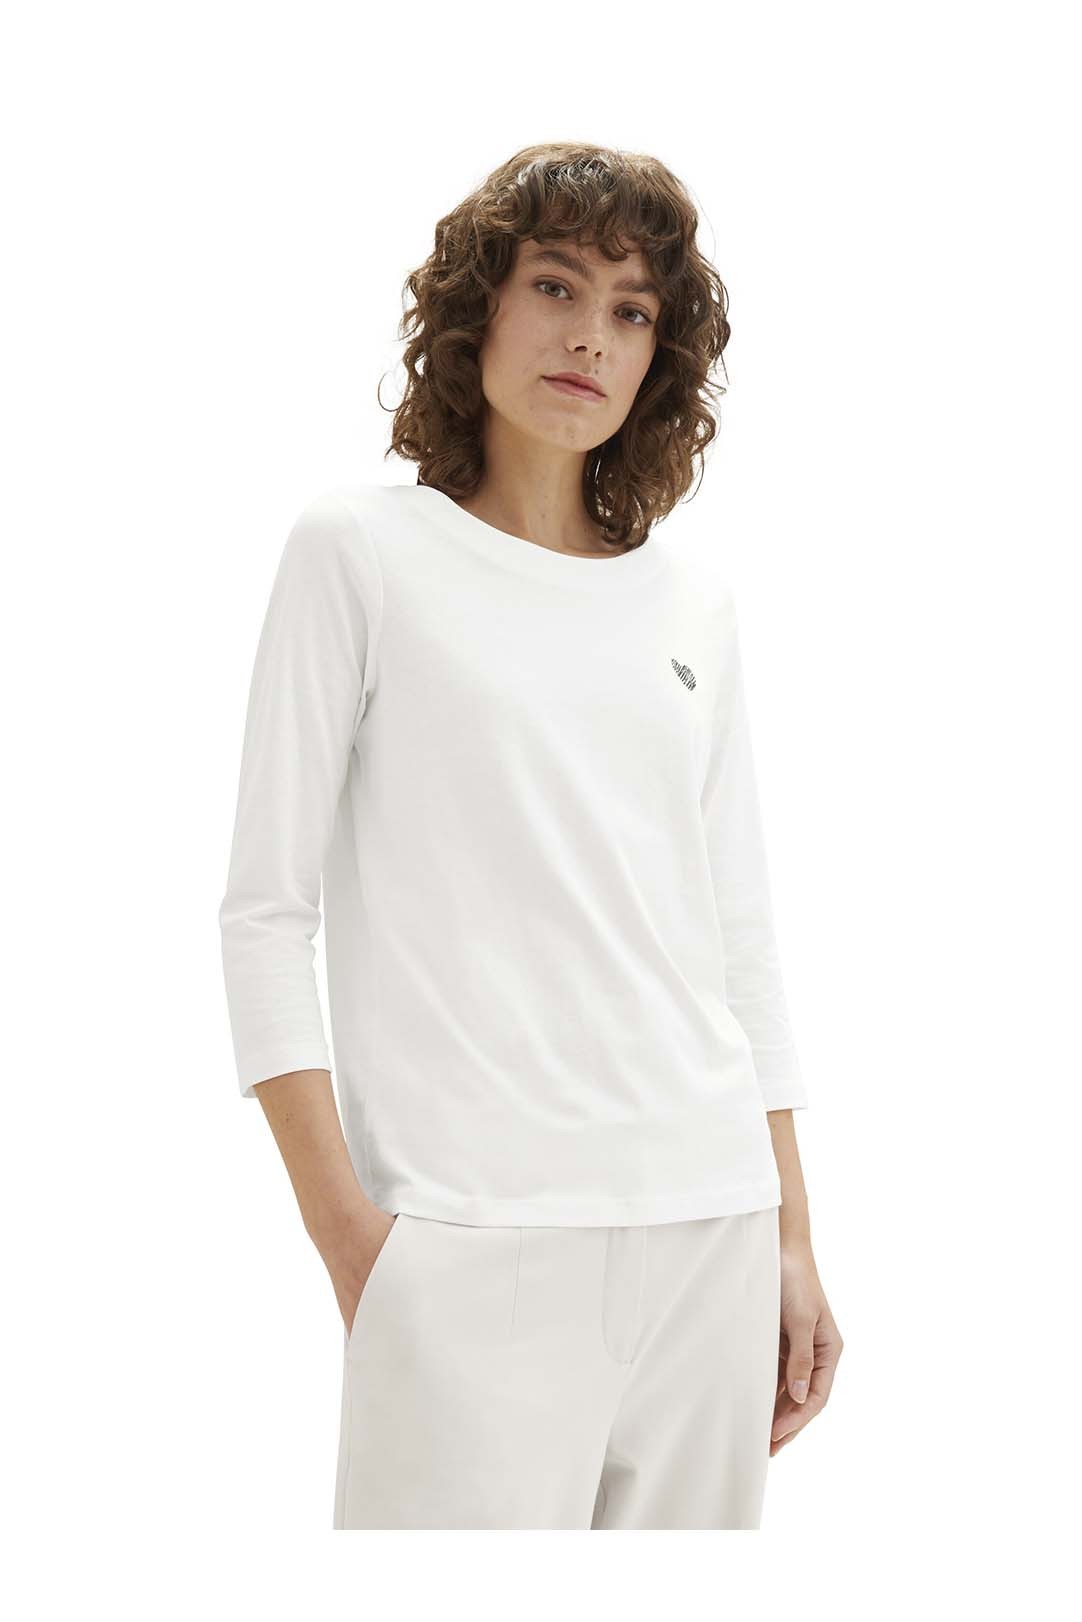 https://mivestidorazul.es/18237-large_default/camiseta-basica-corazon-mujer-blanco.jpg